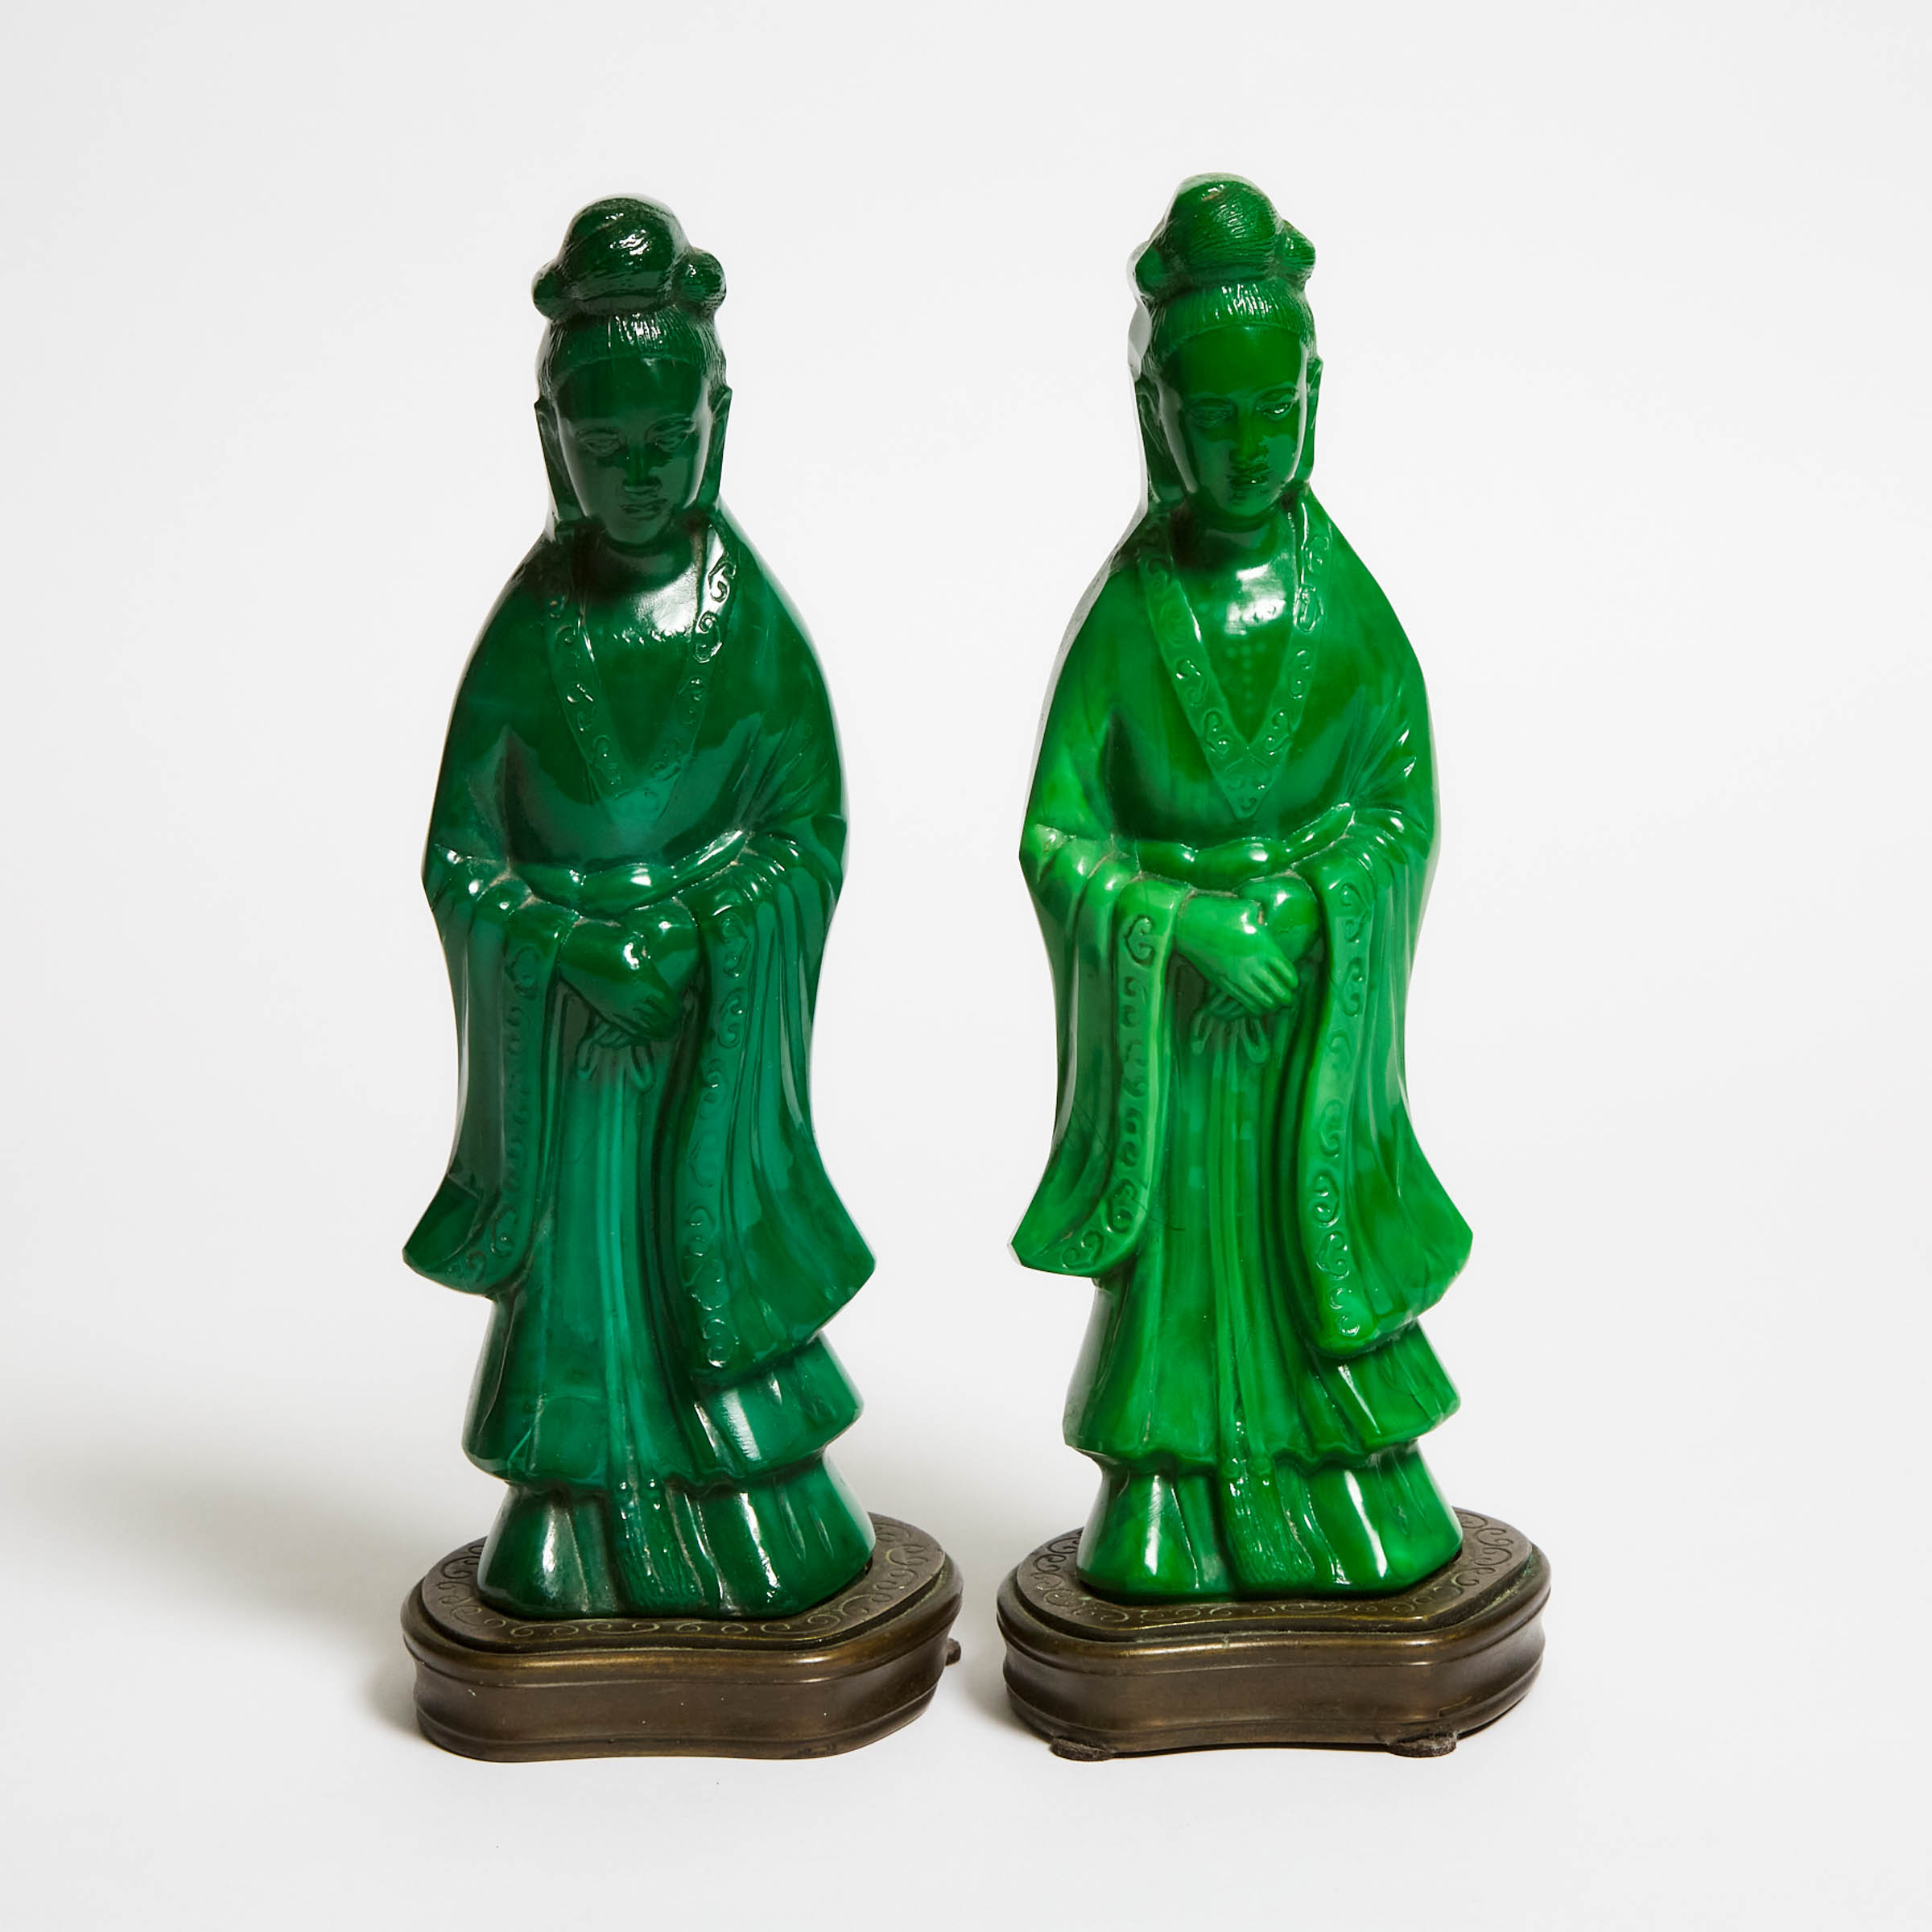 A Pair of Peking Glass Figures of Ladies, Republican Period (1912-1949)